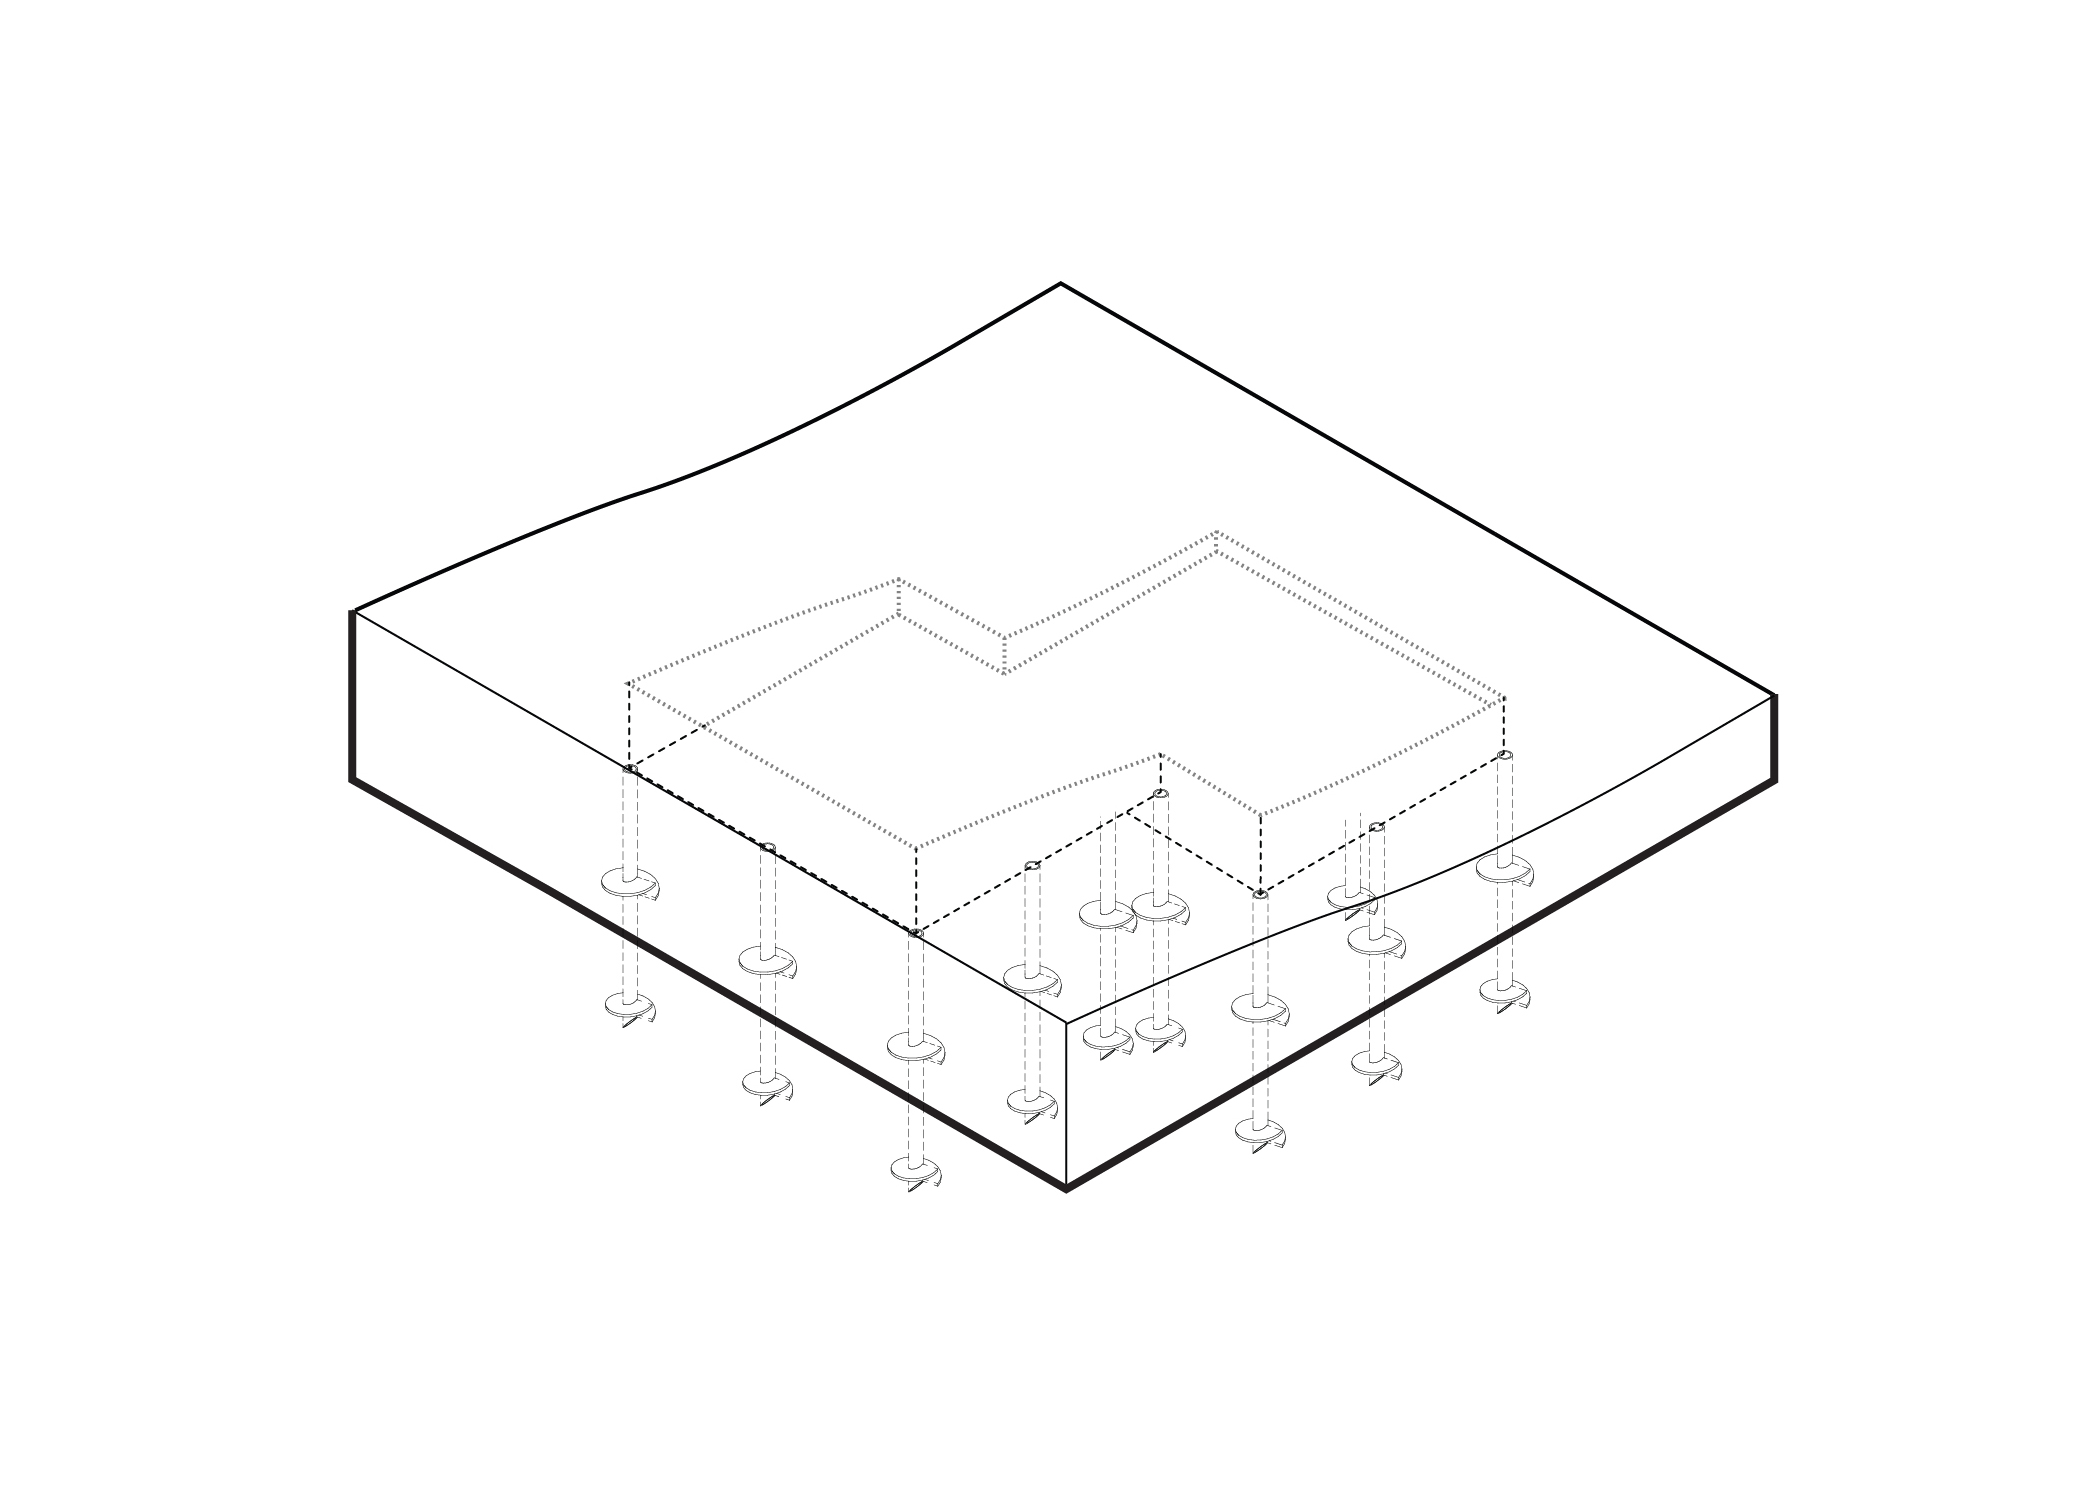 Modular Building process-01.jpg